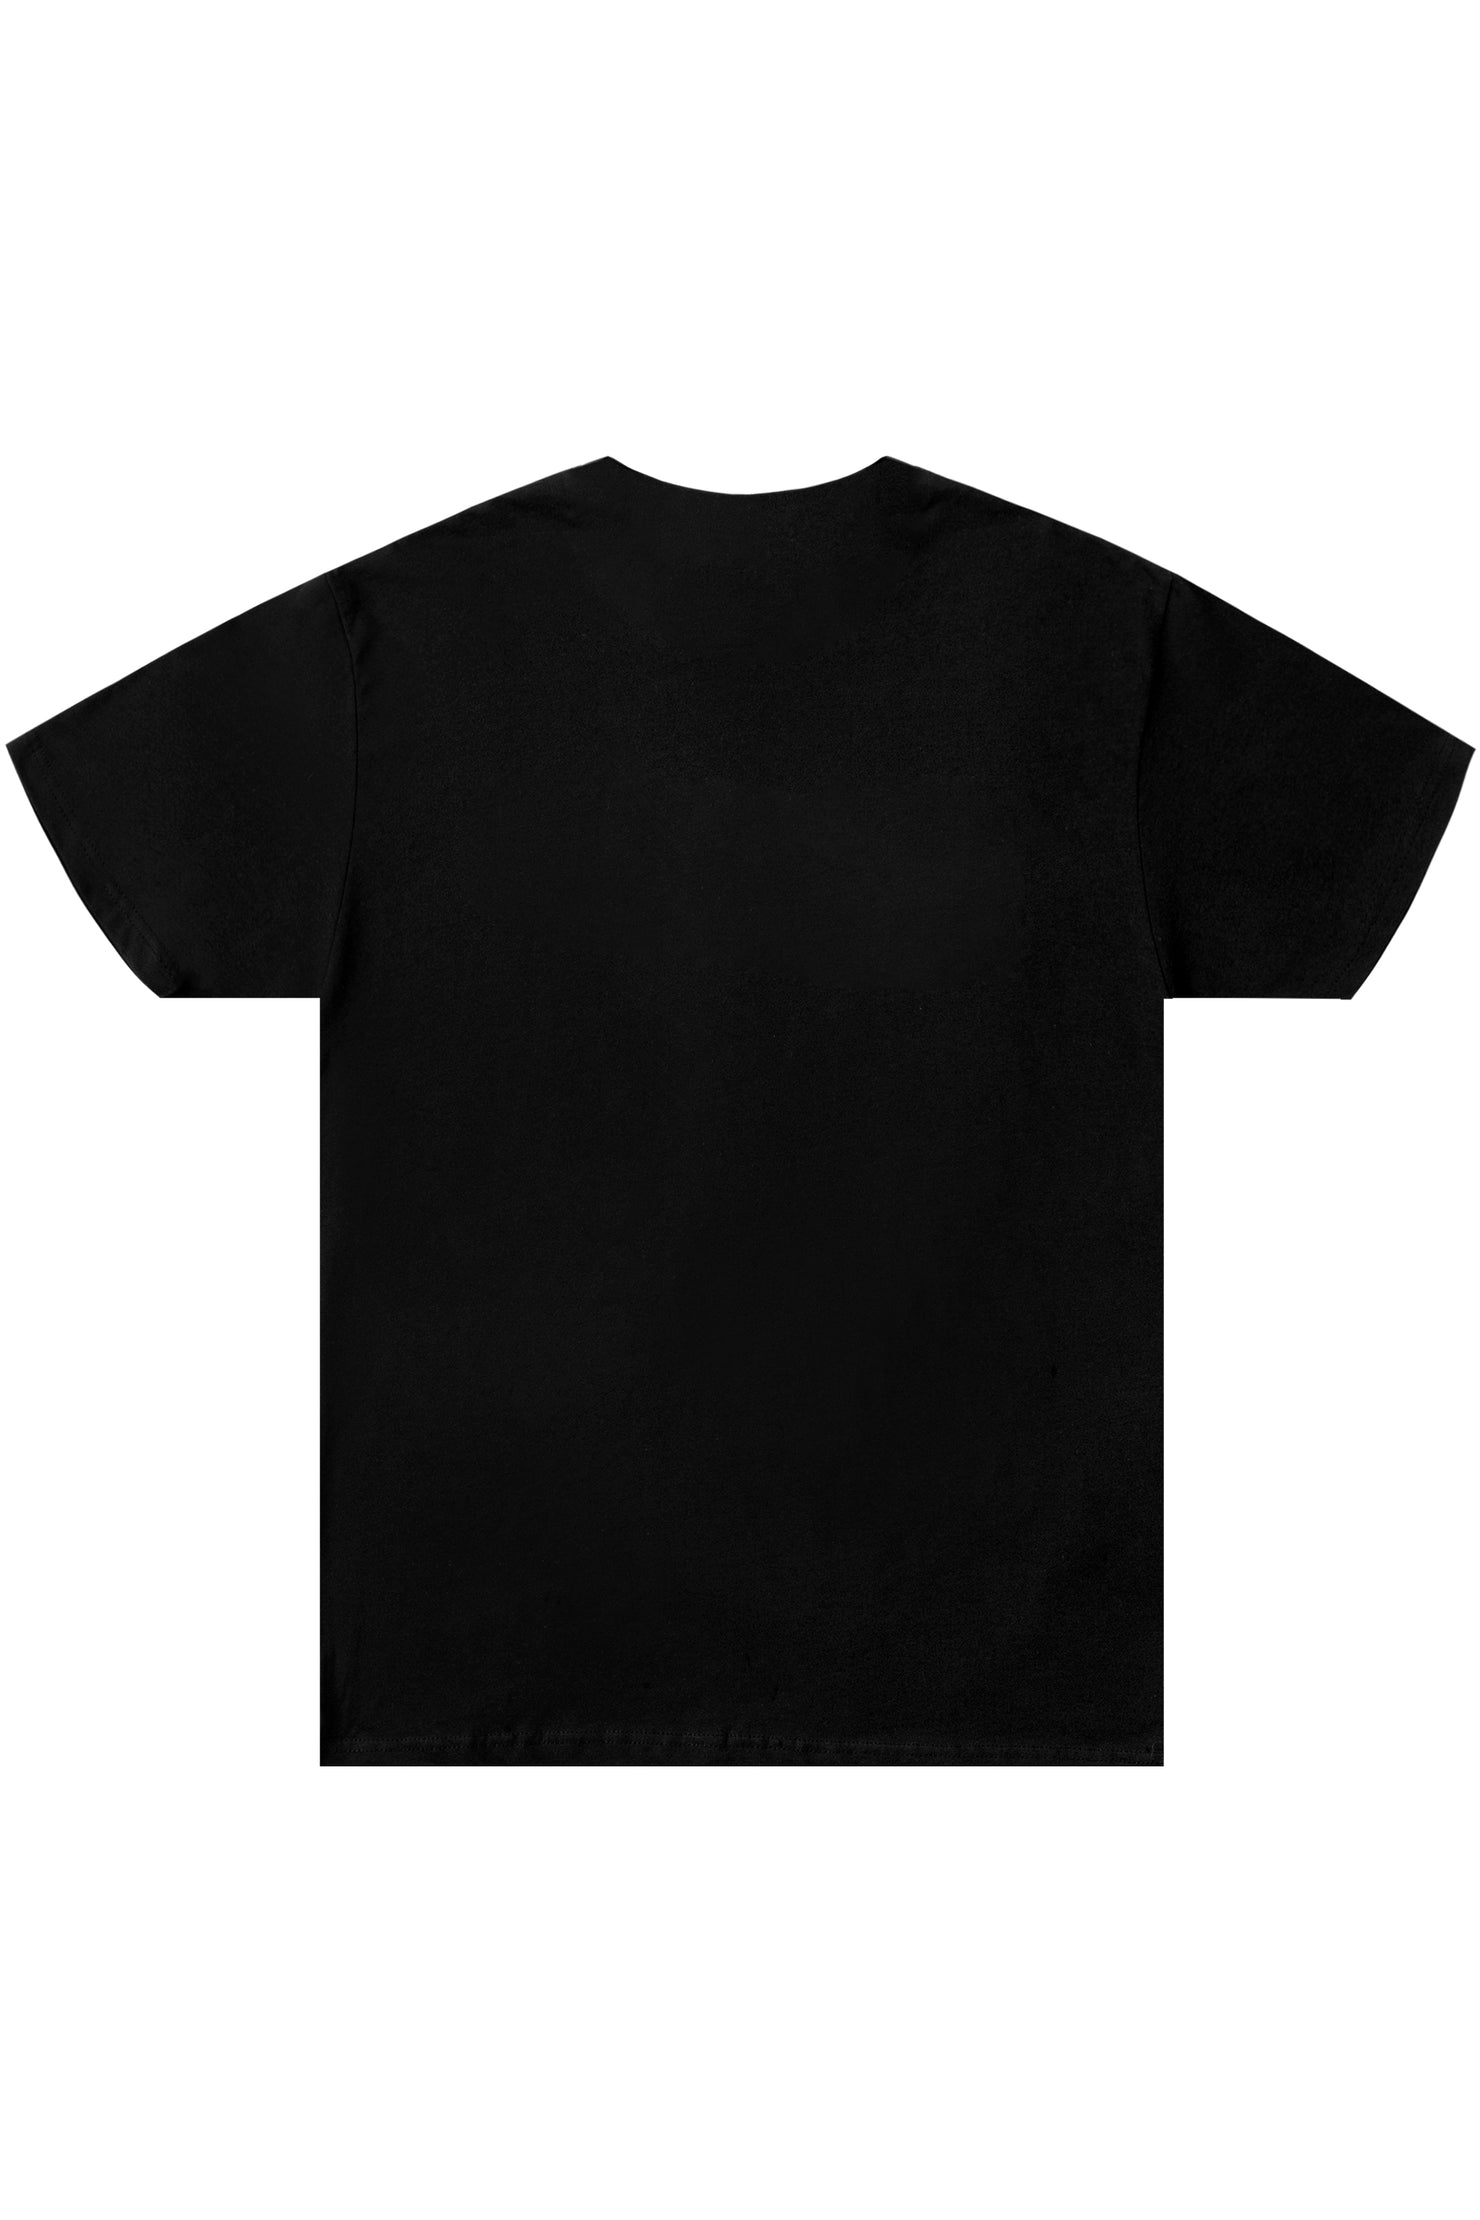 Octavio Printed T-Shirt-Black/White